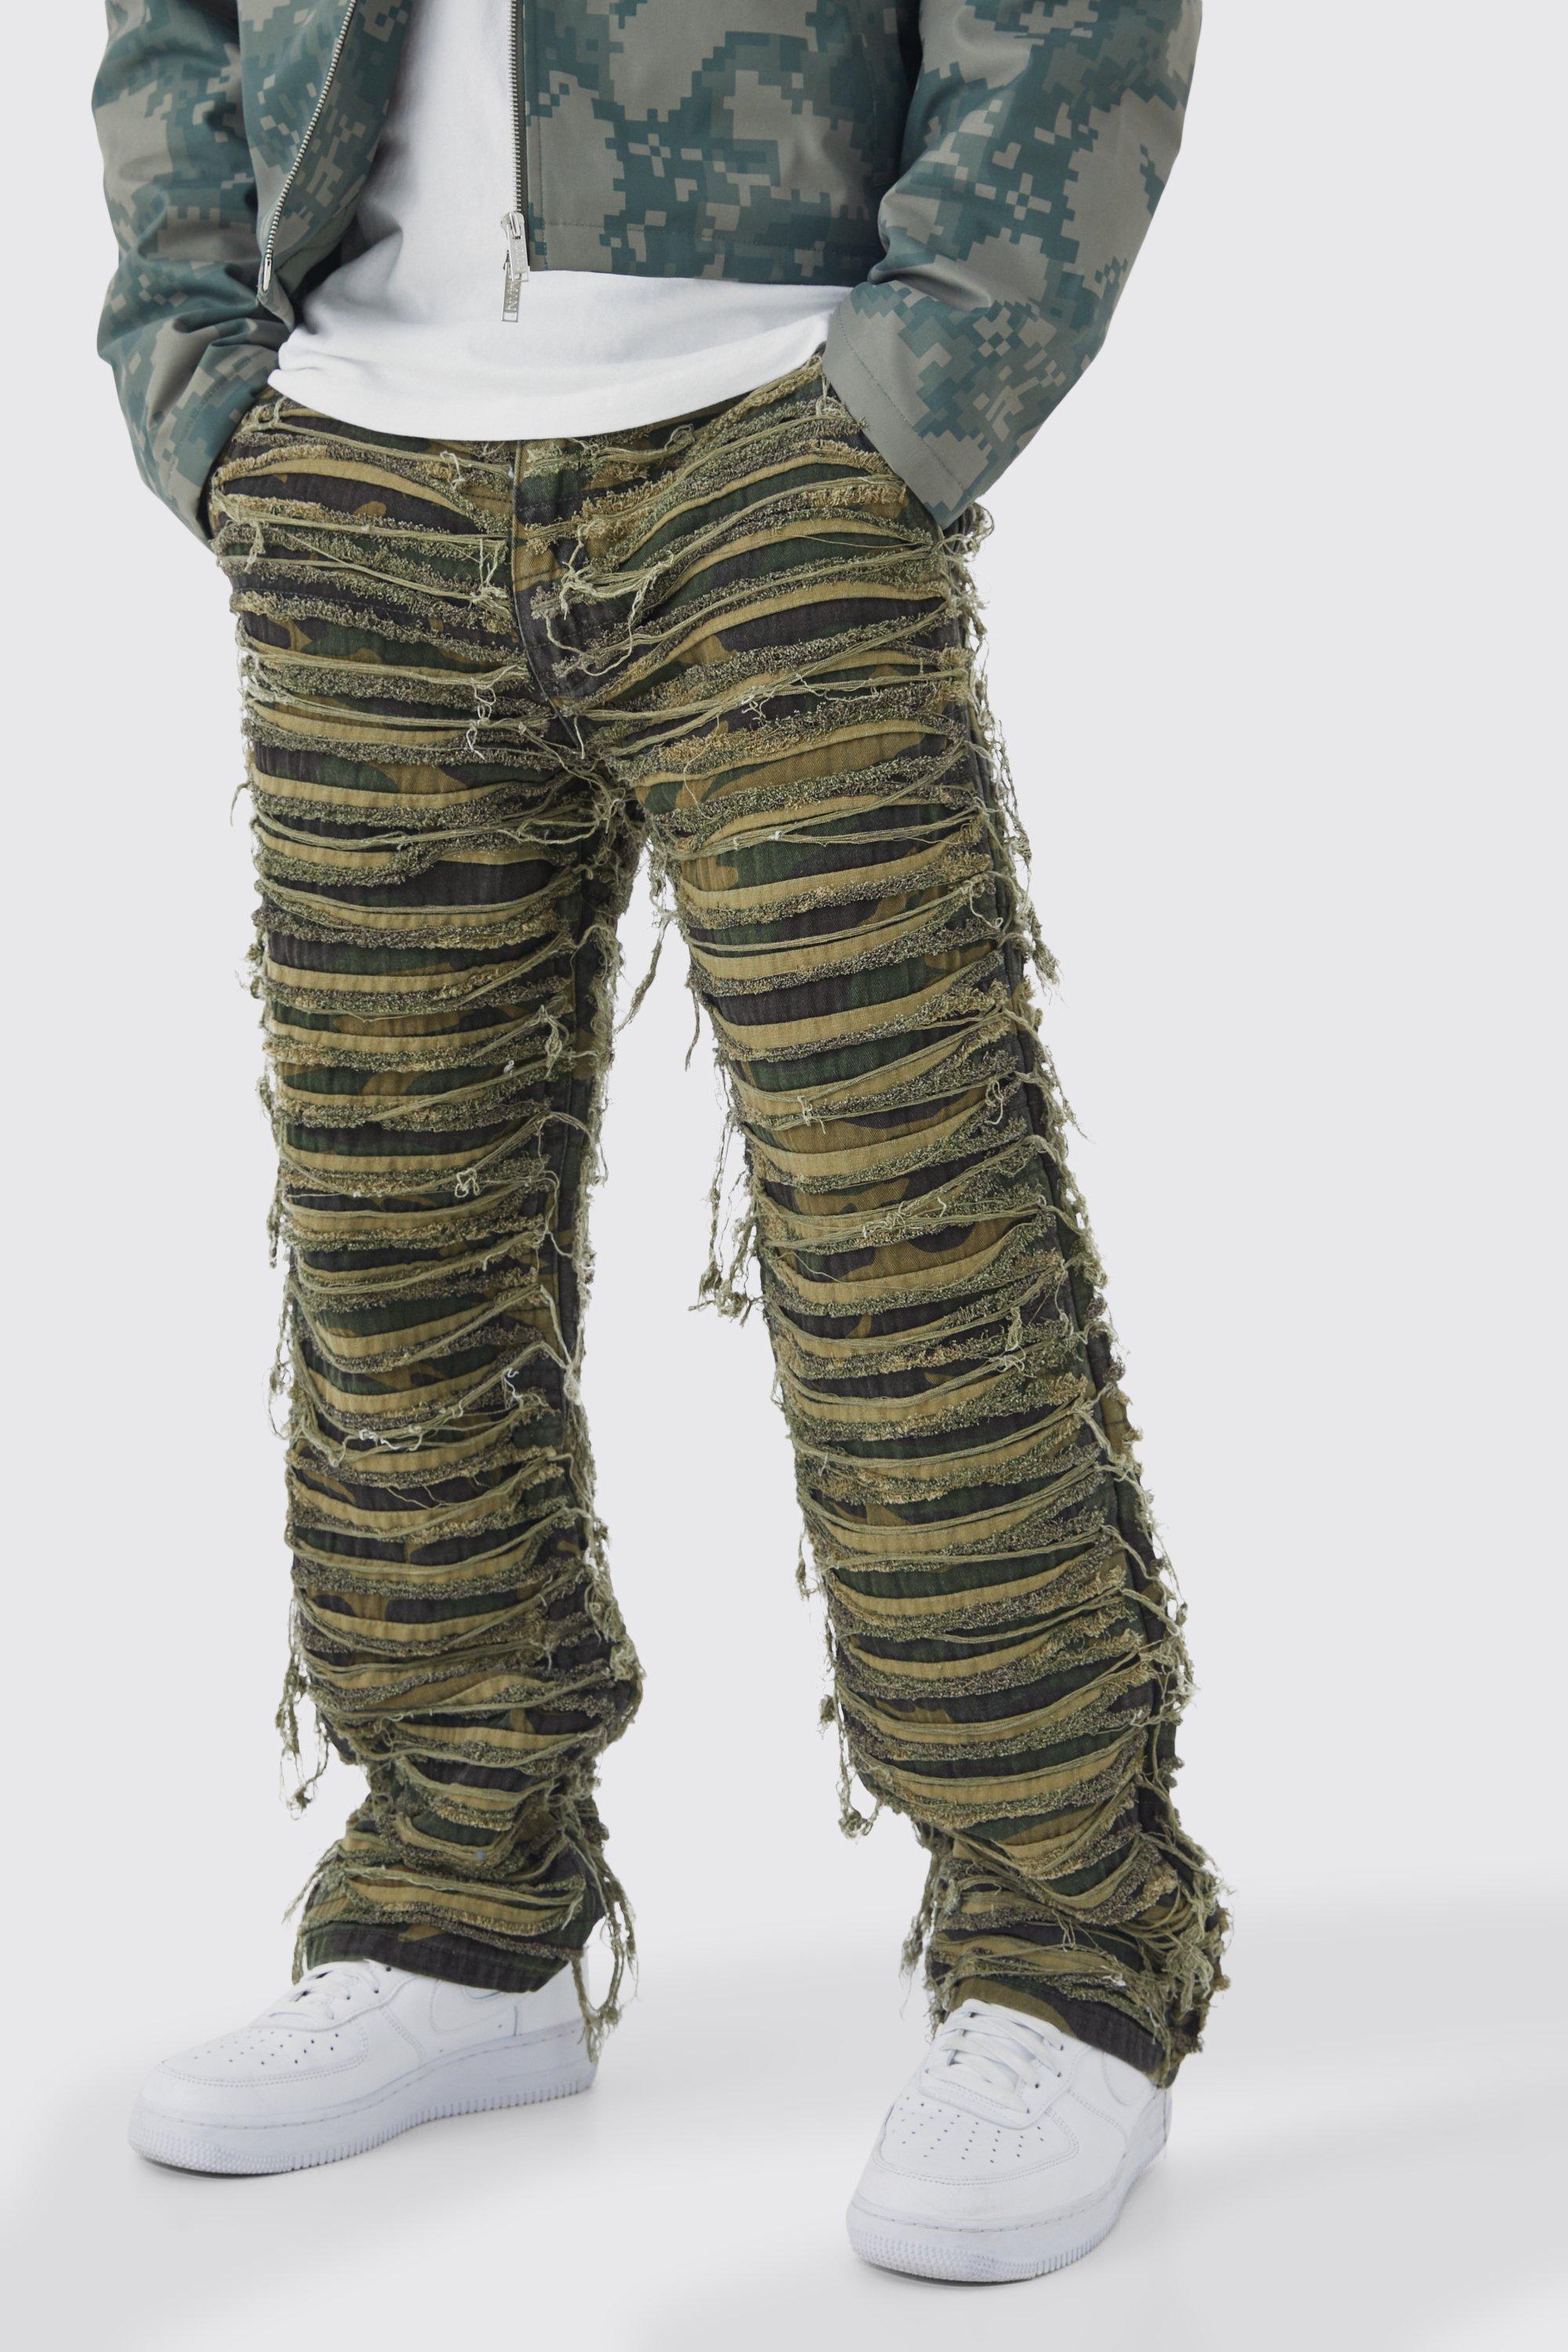 pantalon large à imprimé camouflage homme - kaki - 32, kaki